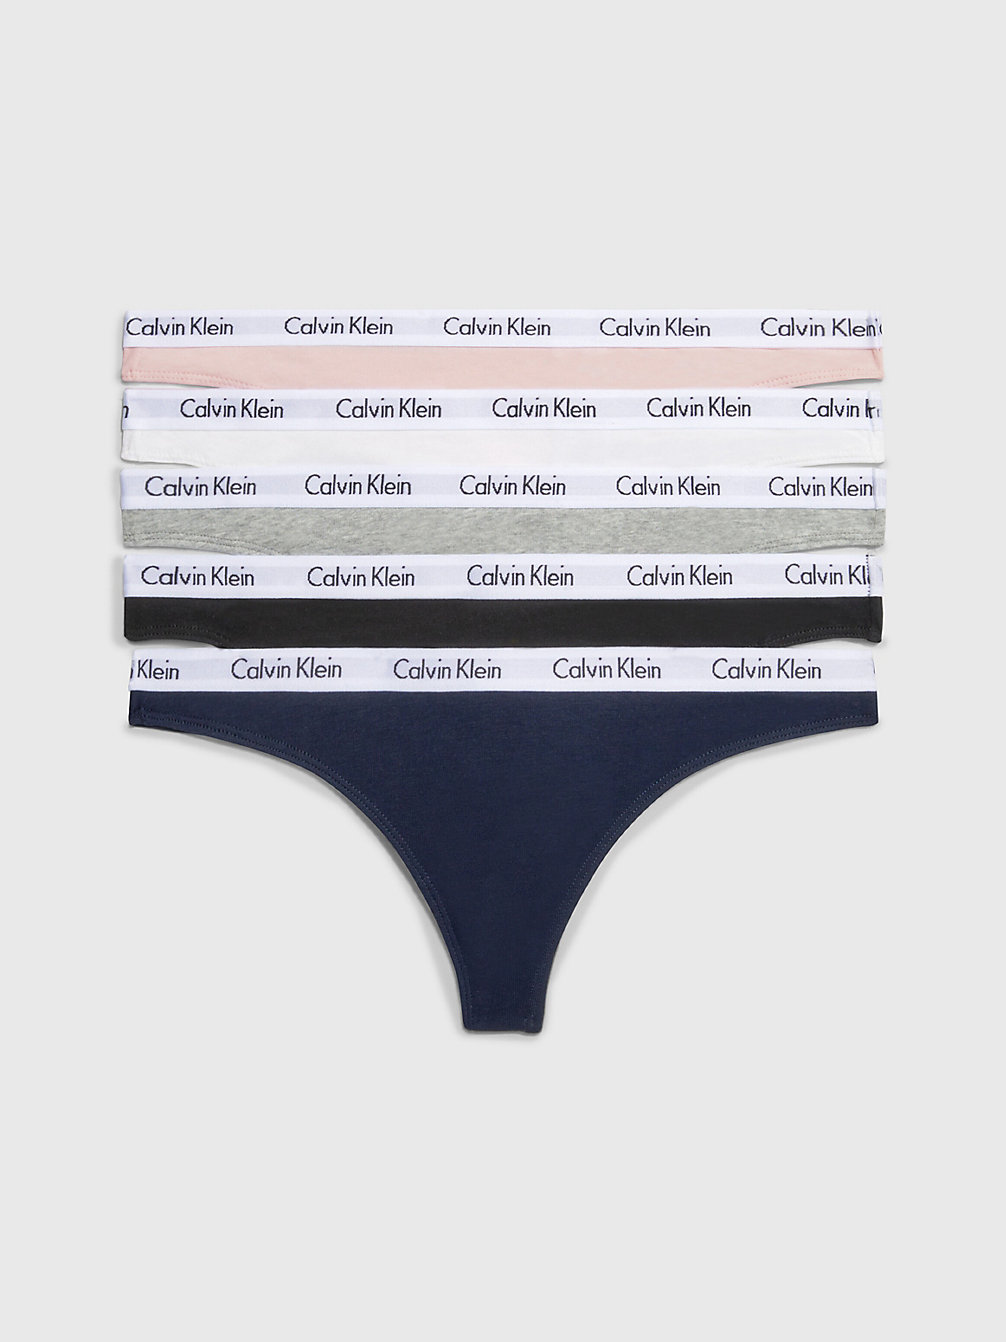 B/W/GH/NT/SL 5 Pack Thongs - Carousel undefined women Calvin Klein